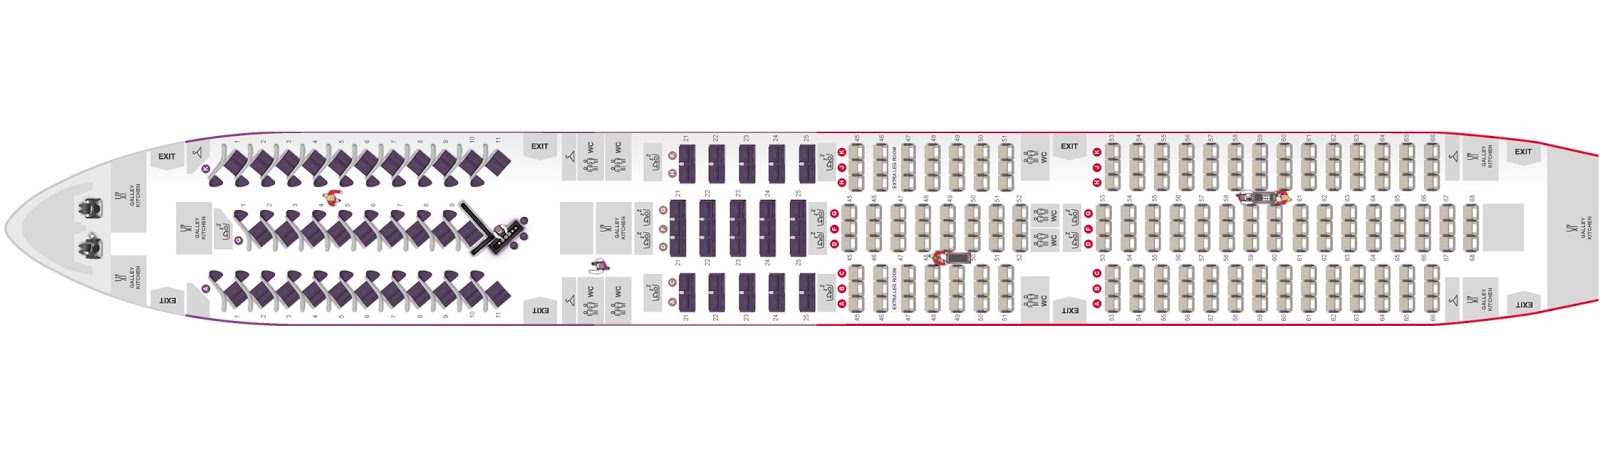 Virgin Atlantic 787 Dreamliner Seat Map Brokeasshomecom.